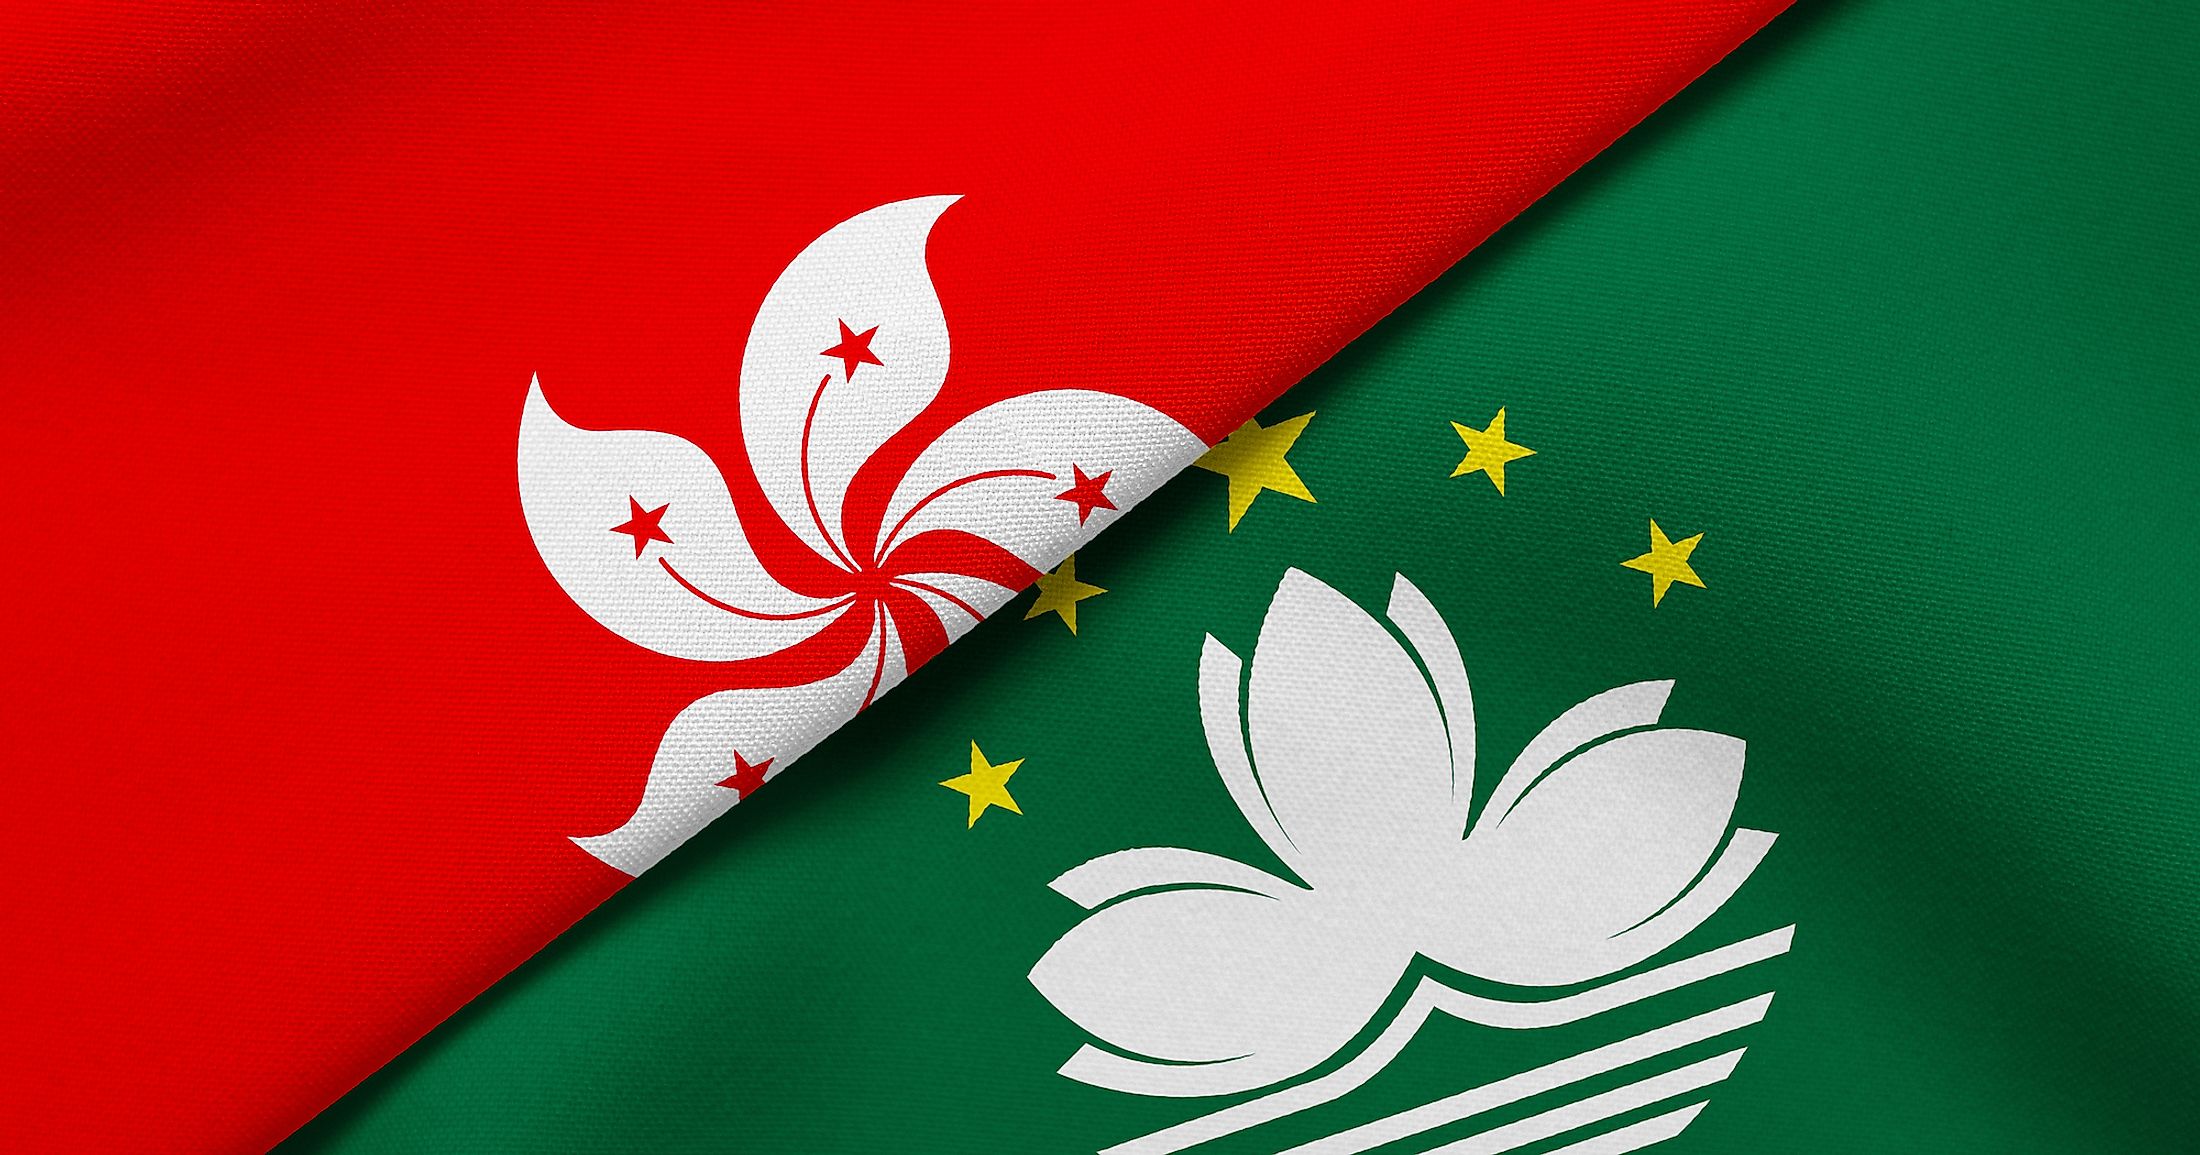 Hong Kong and Macau's flags